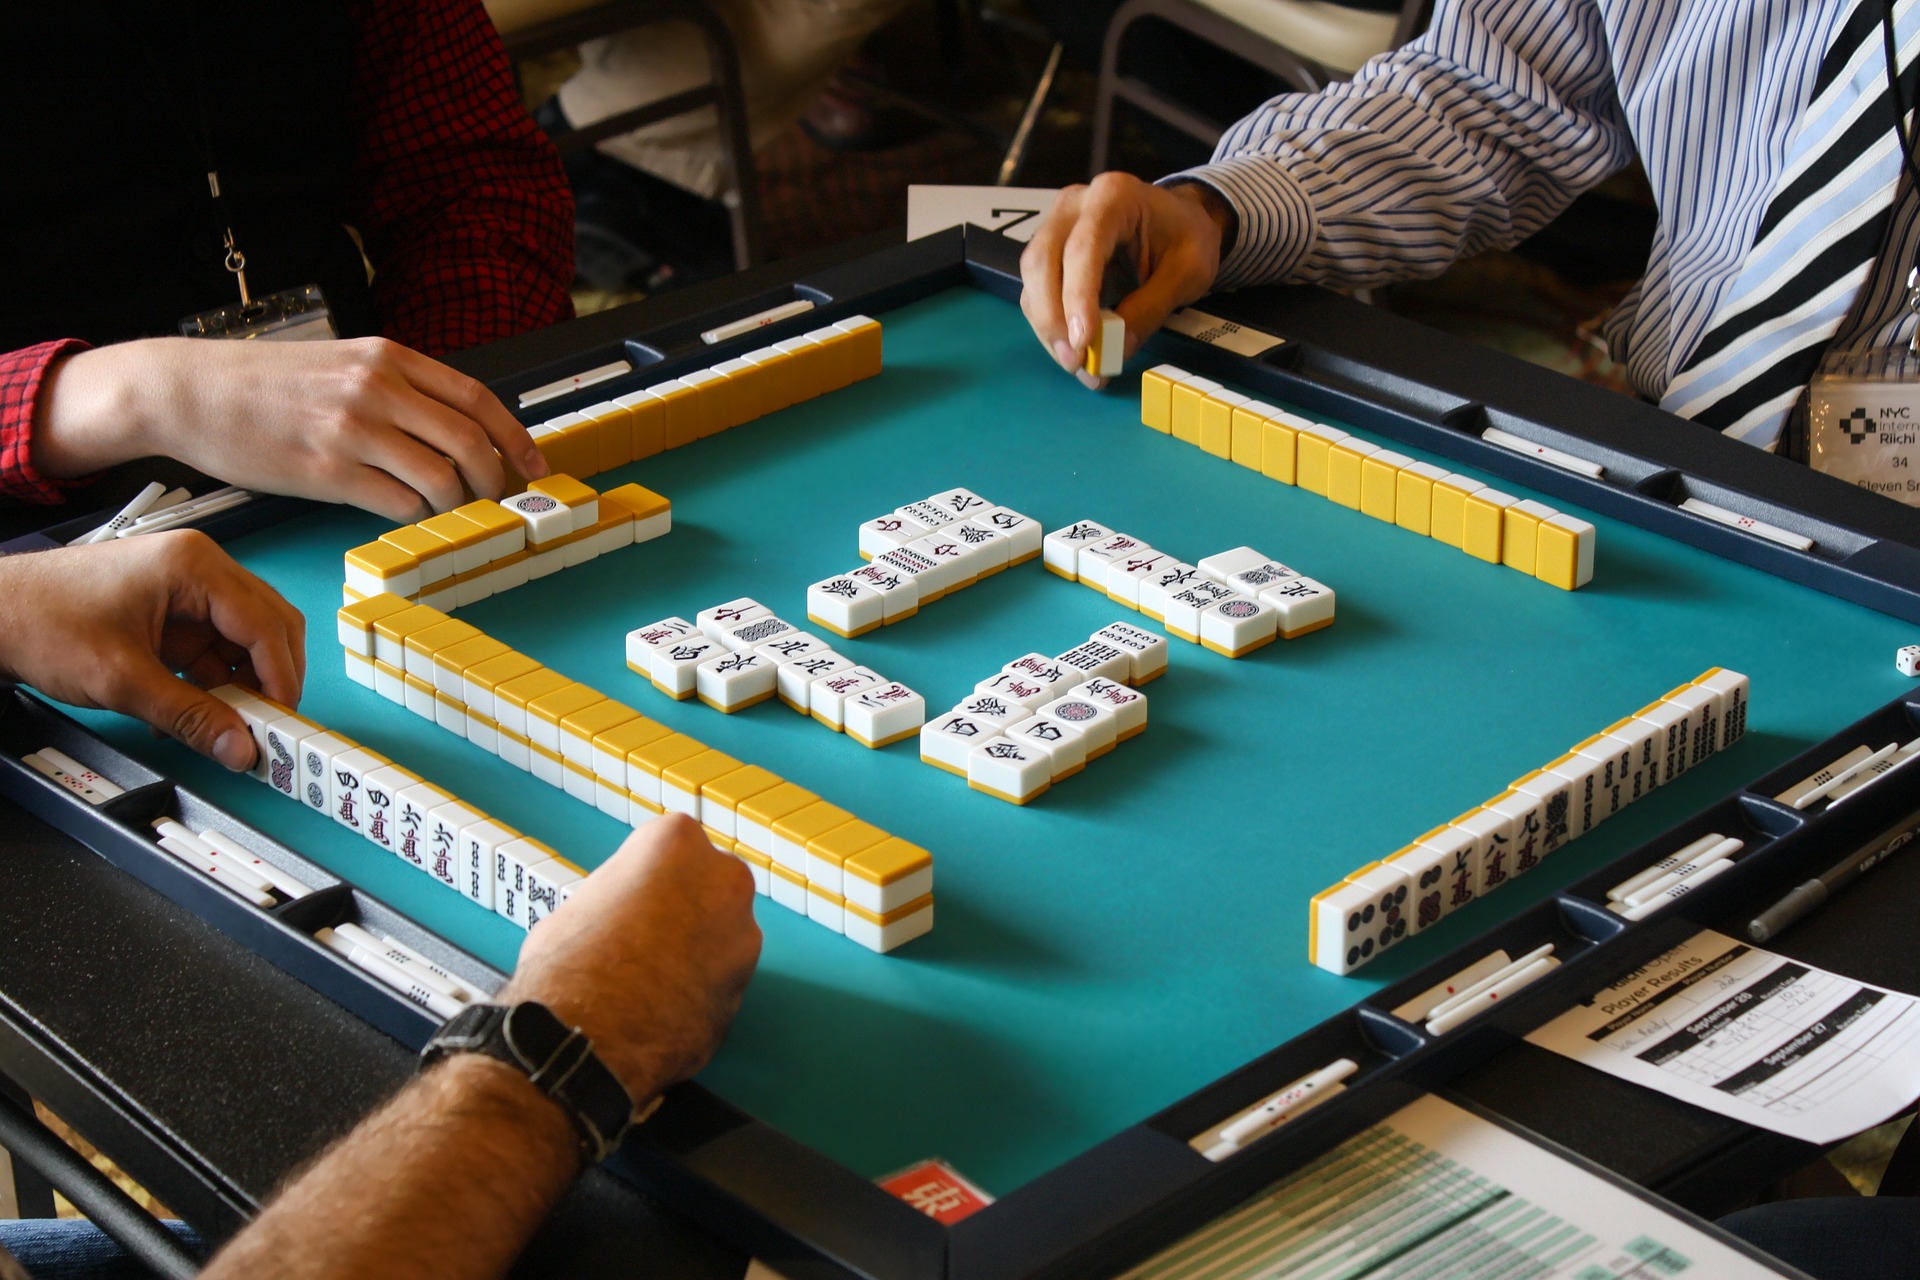 Two Player Riichi - Mahjong Wiki (麻将维基)